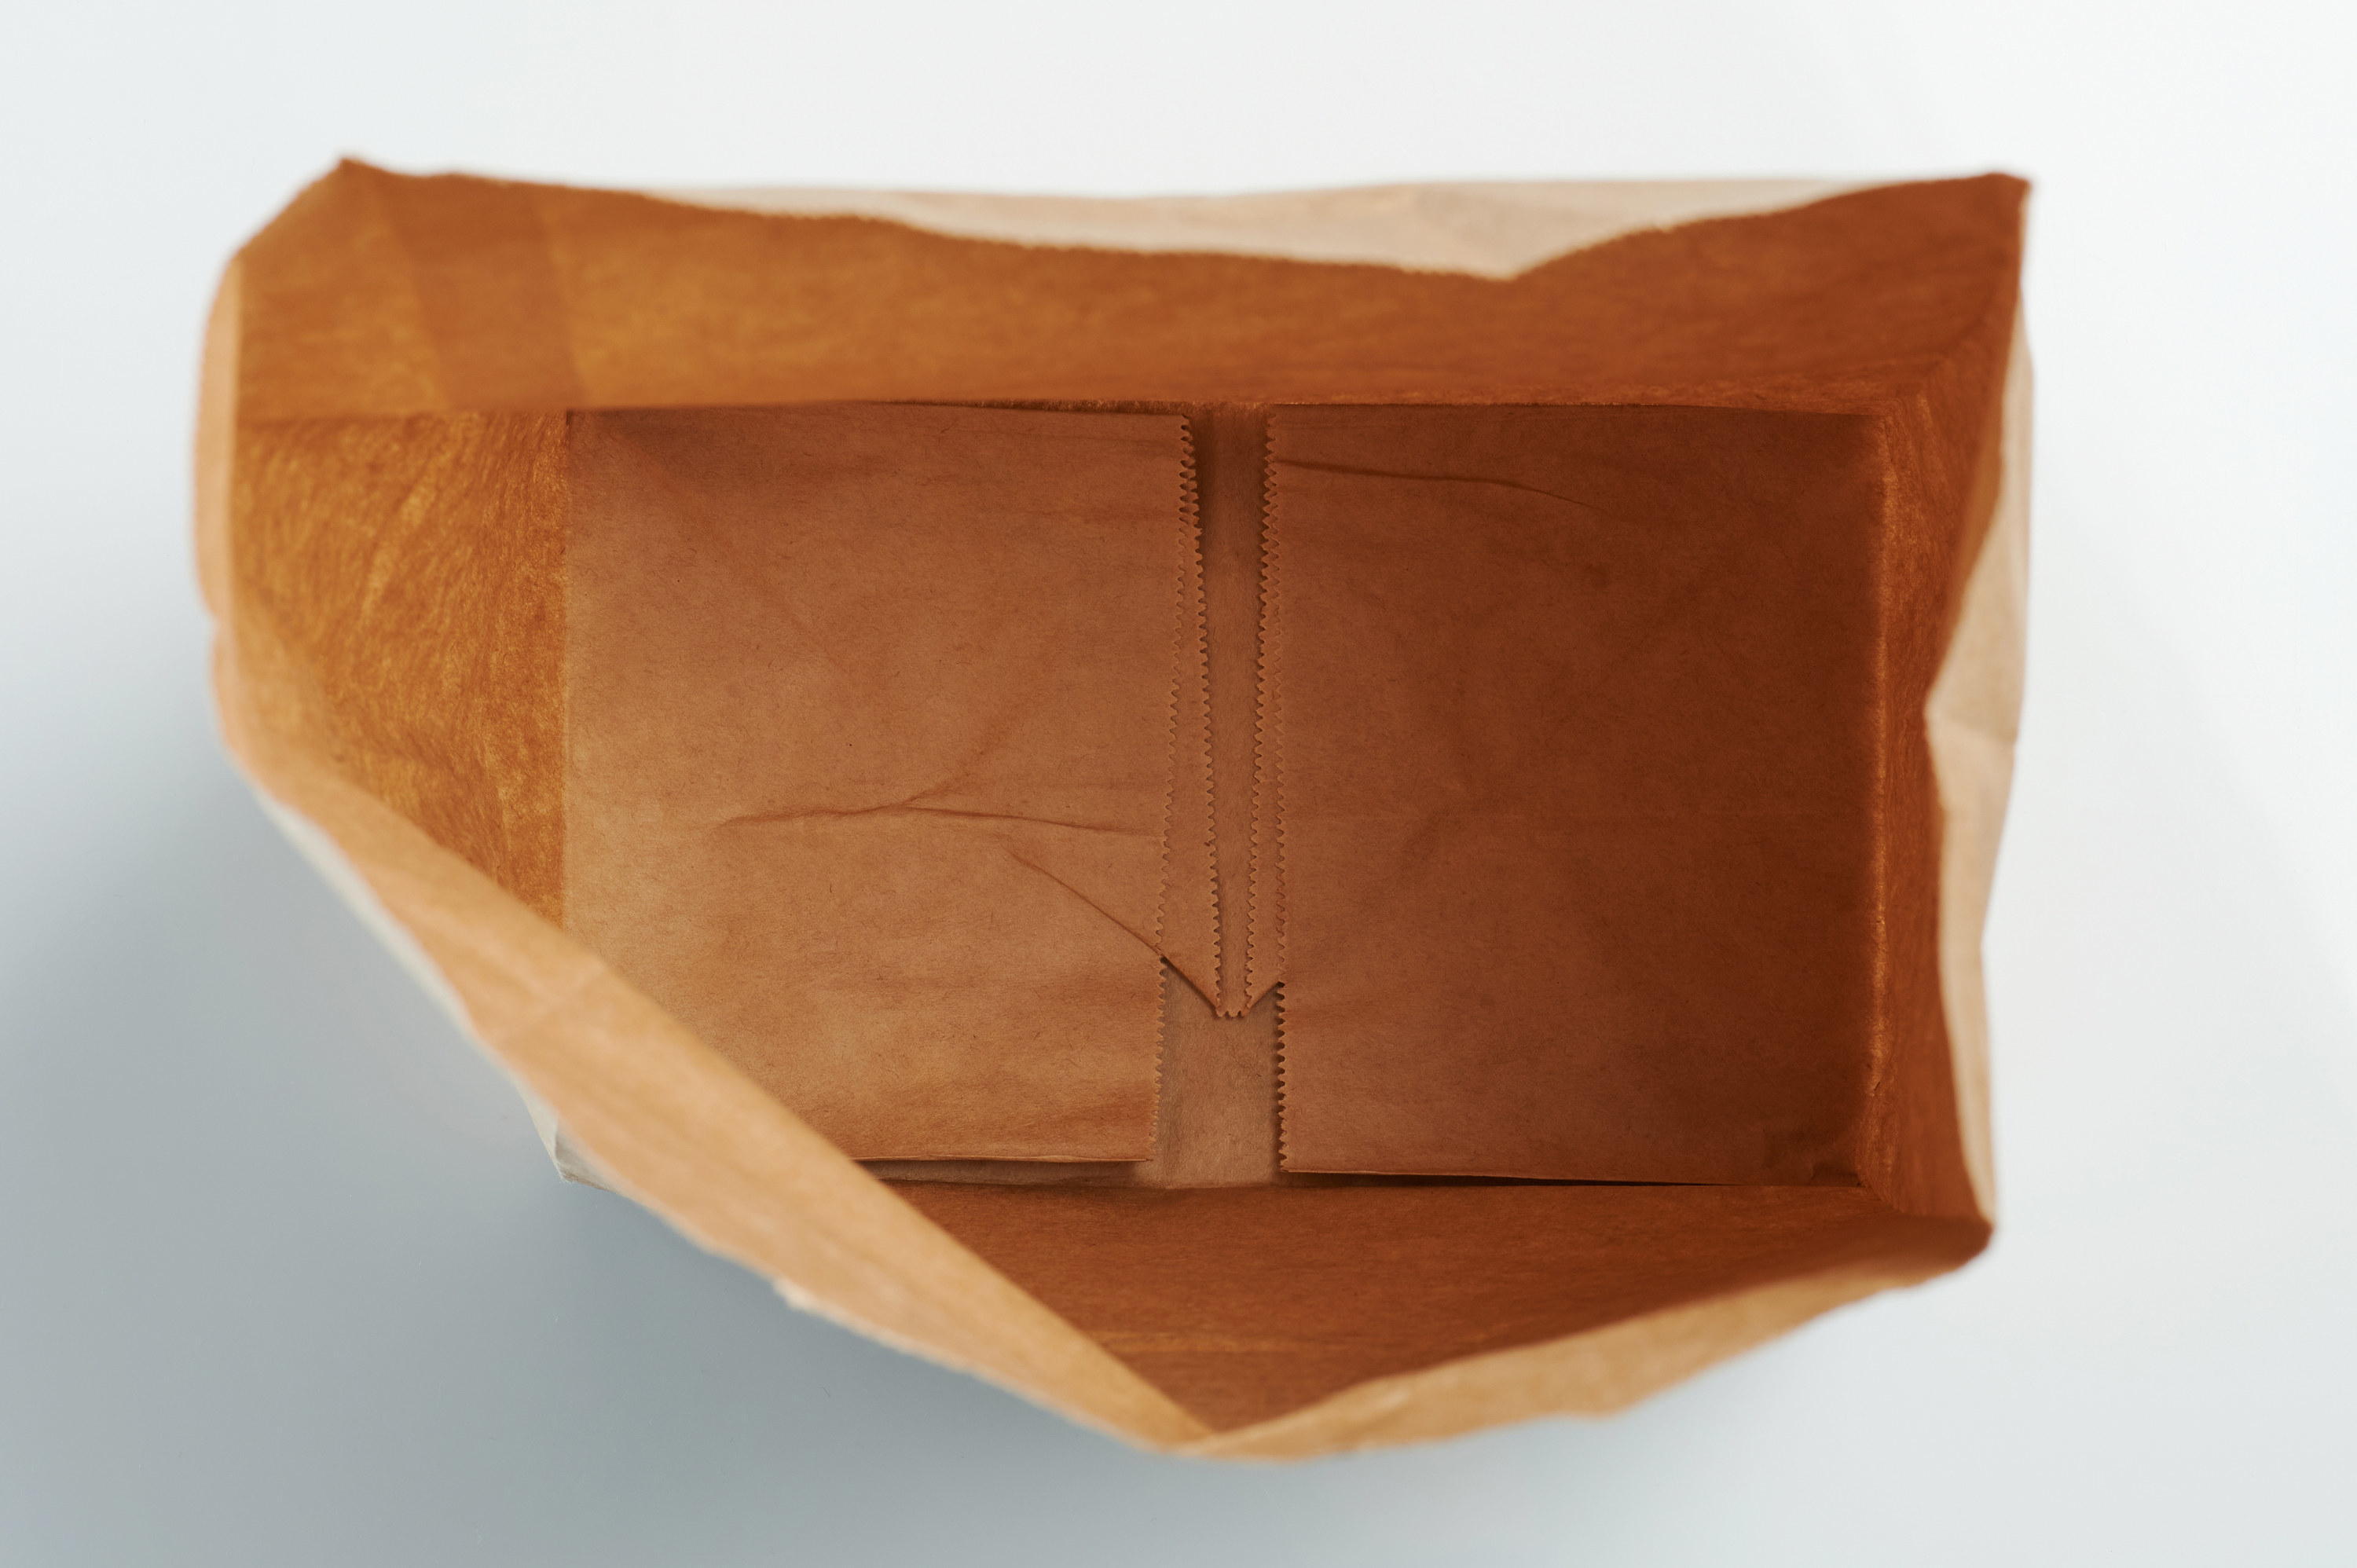 A paper bag with a rectangular bottom